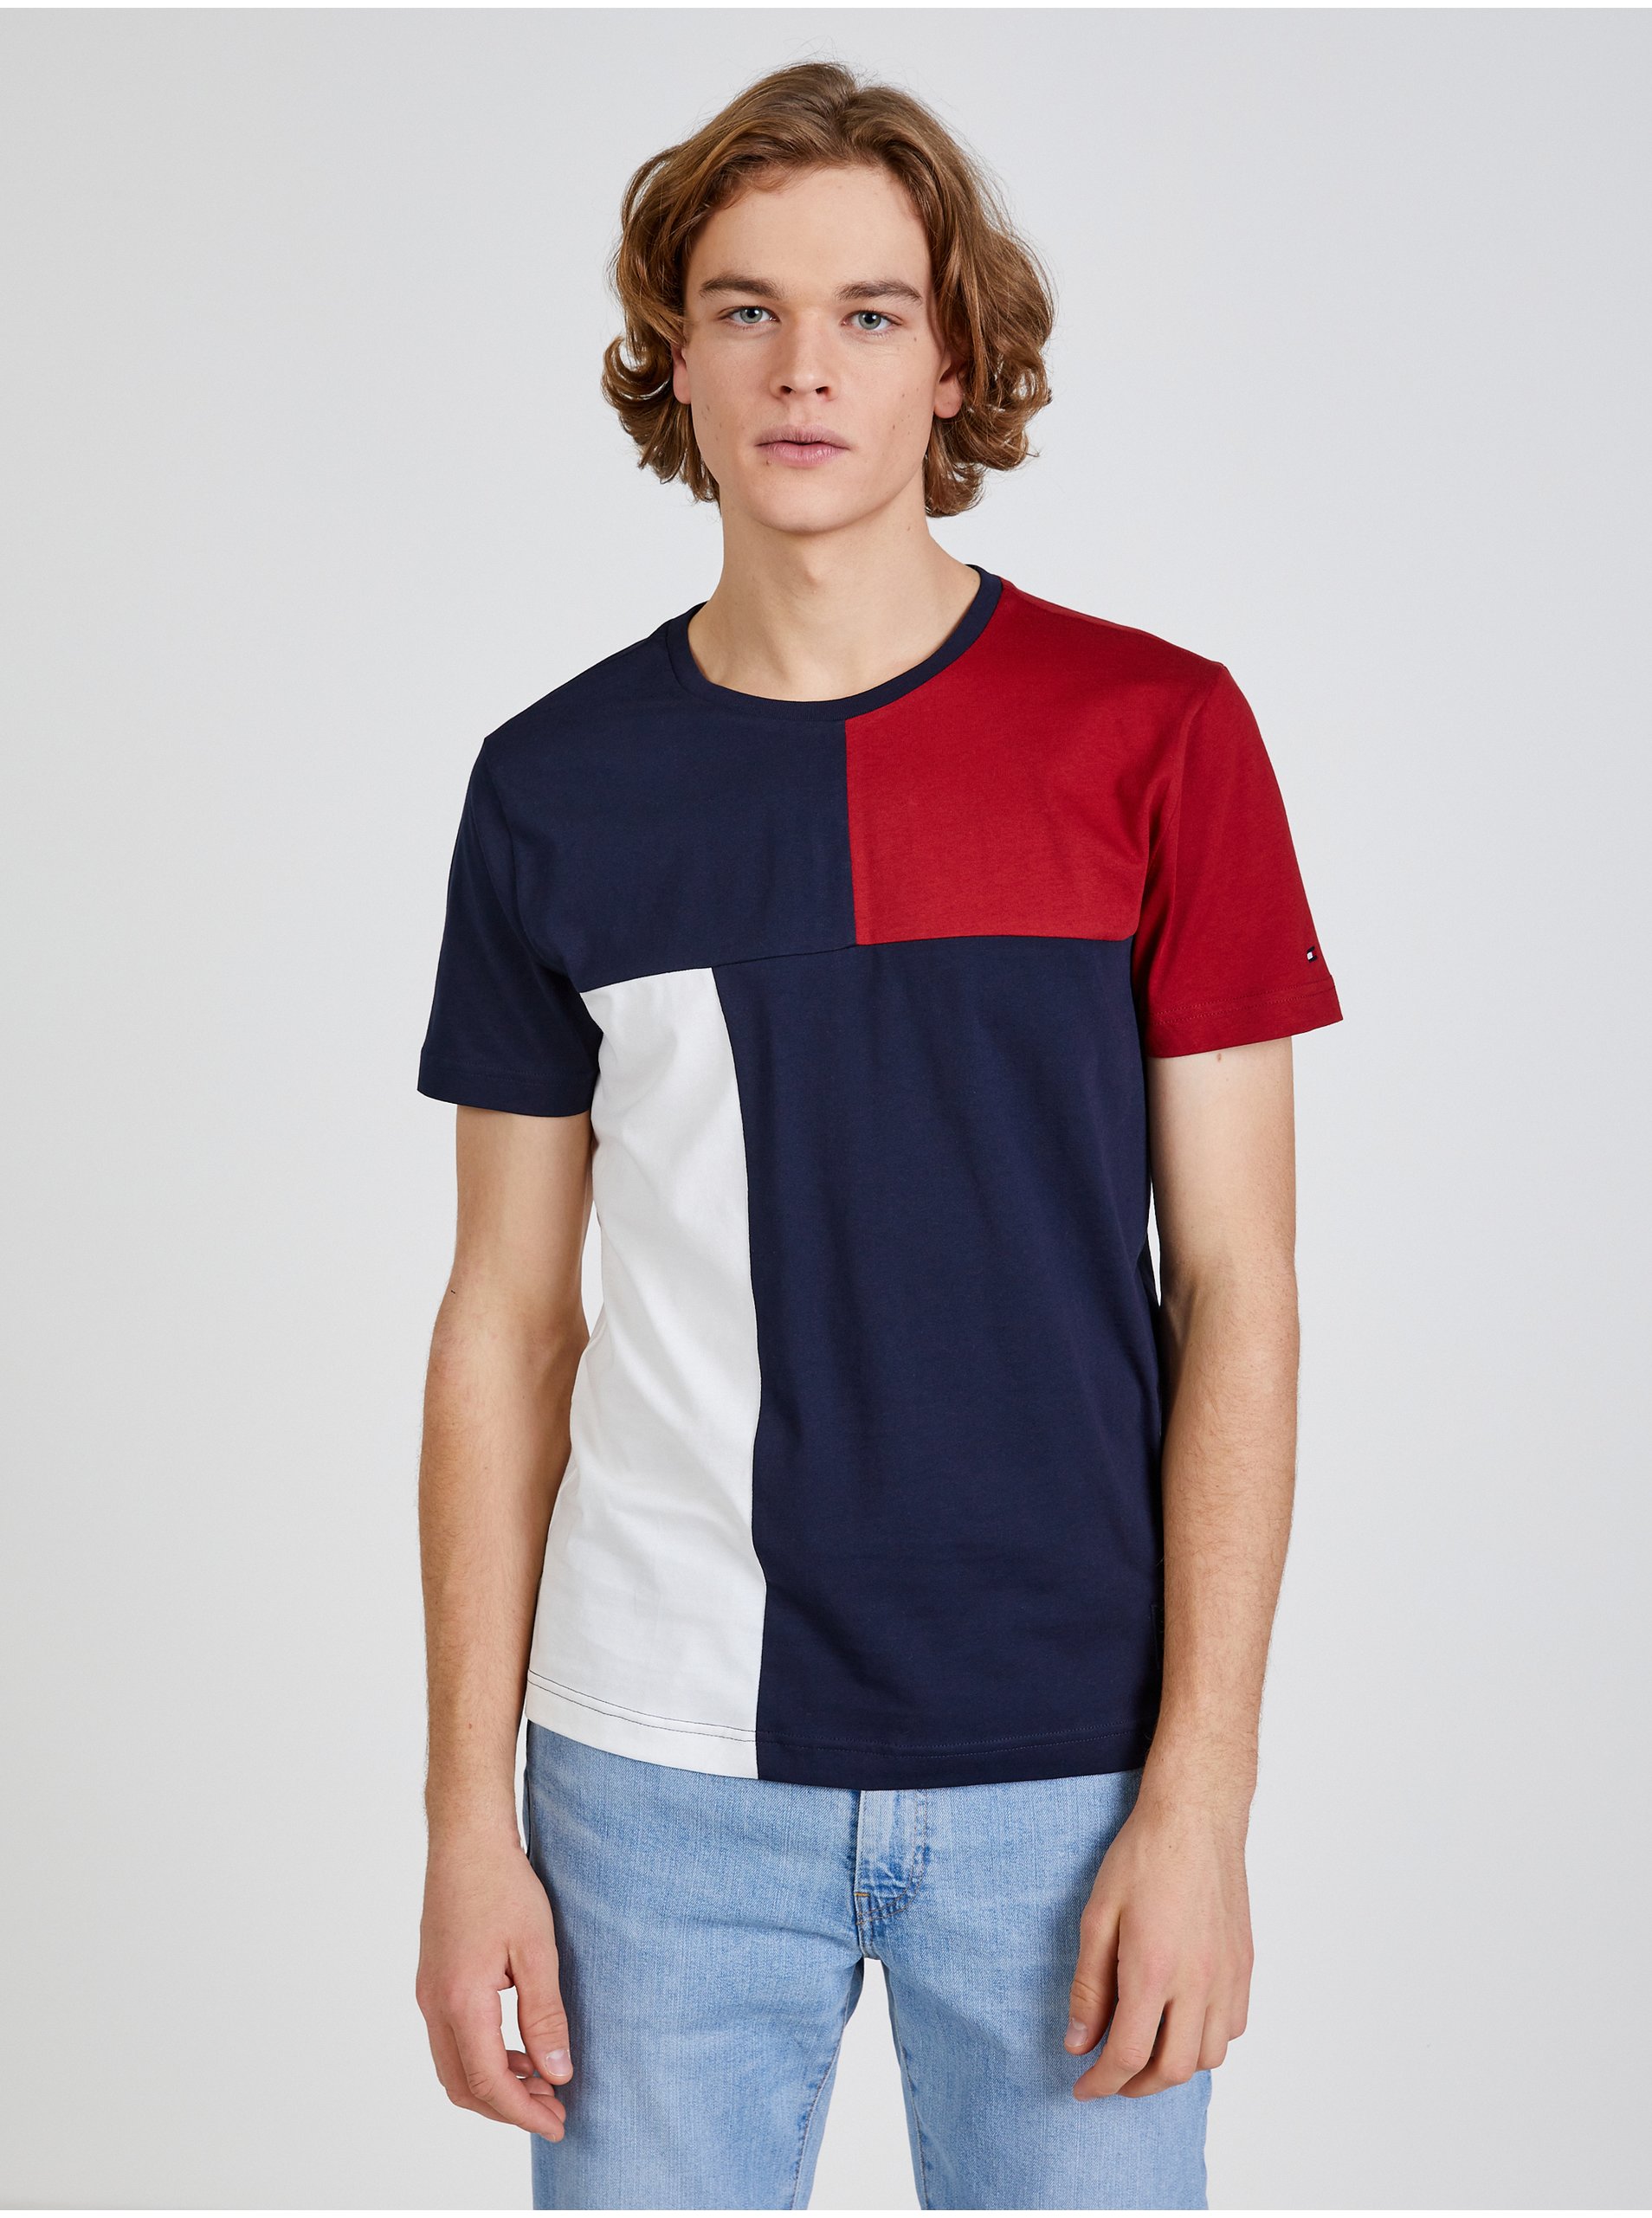 Lacno Červeno-bielo-modré pánske tričko Tommy Hilfiger Colorblock